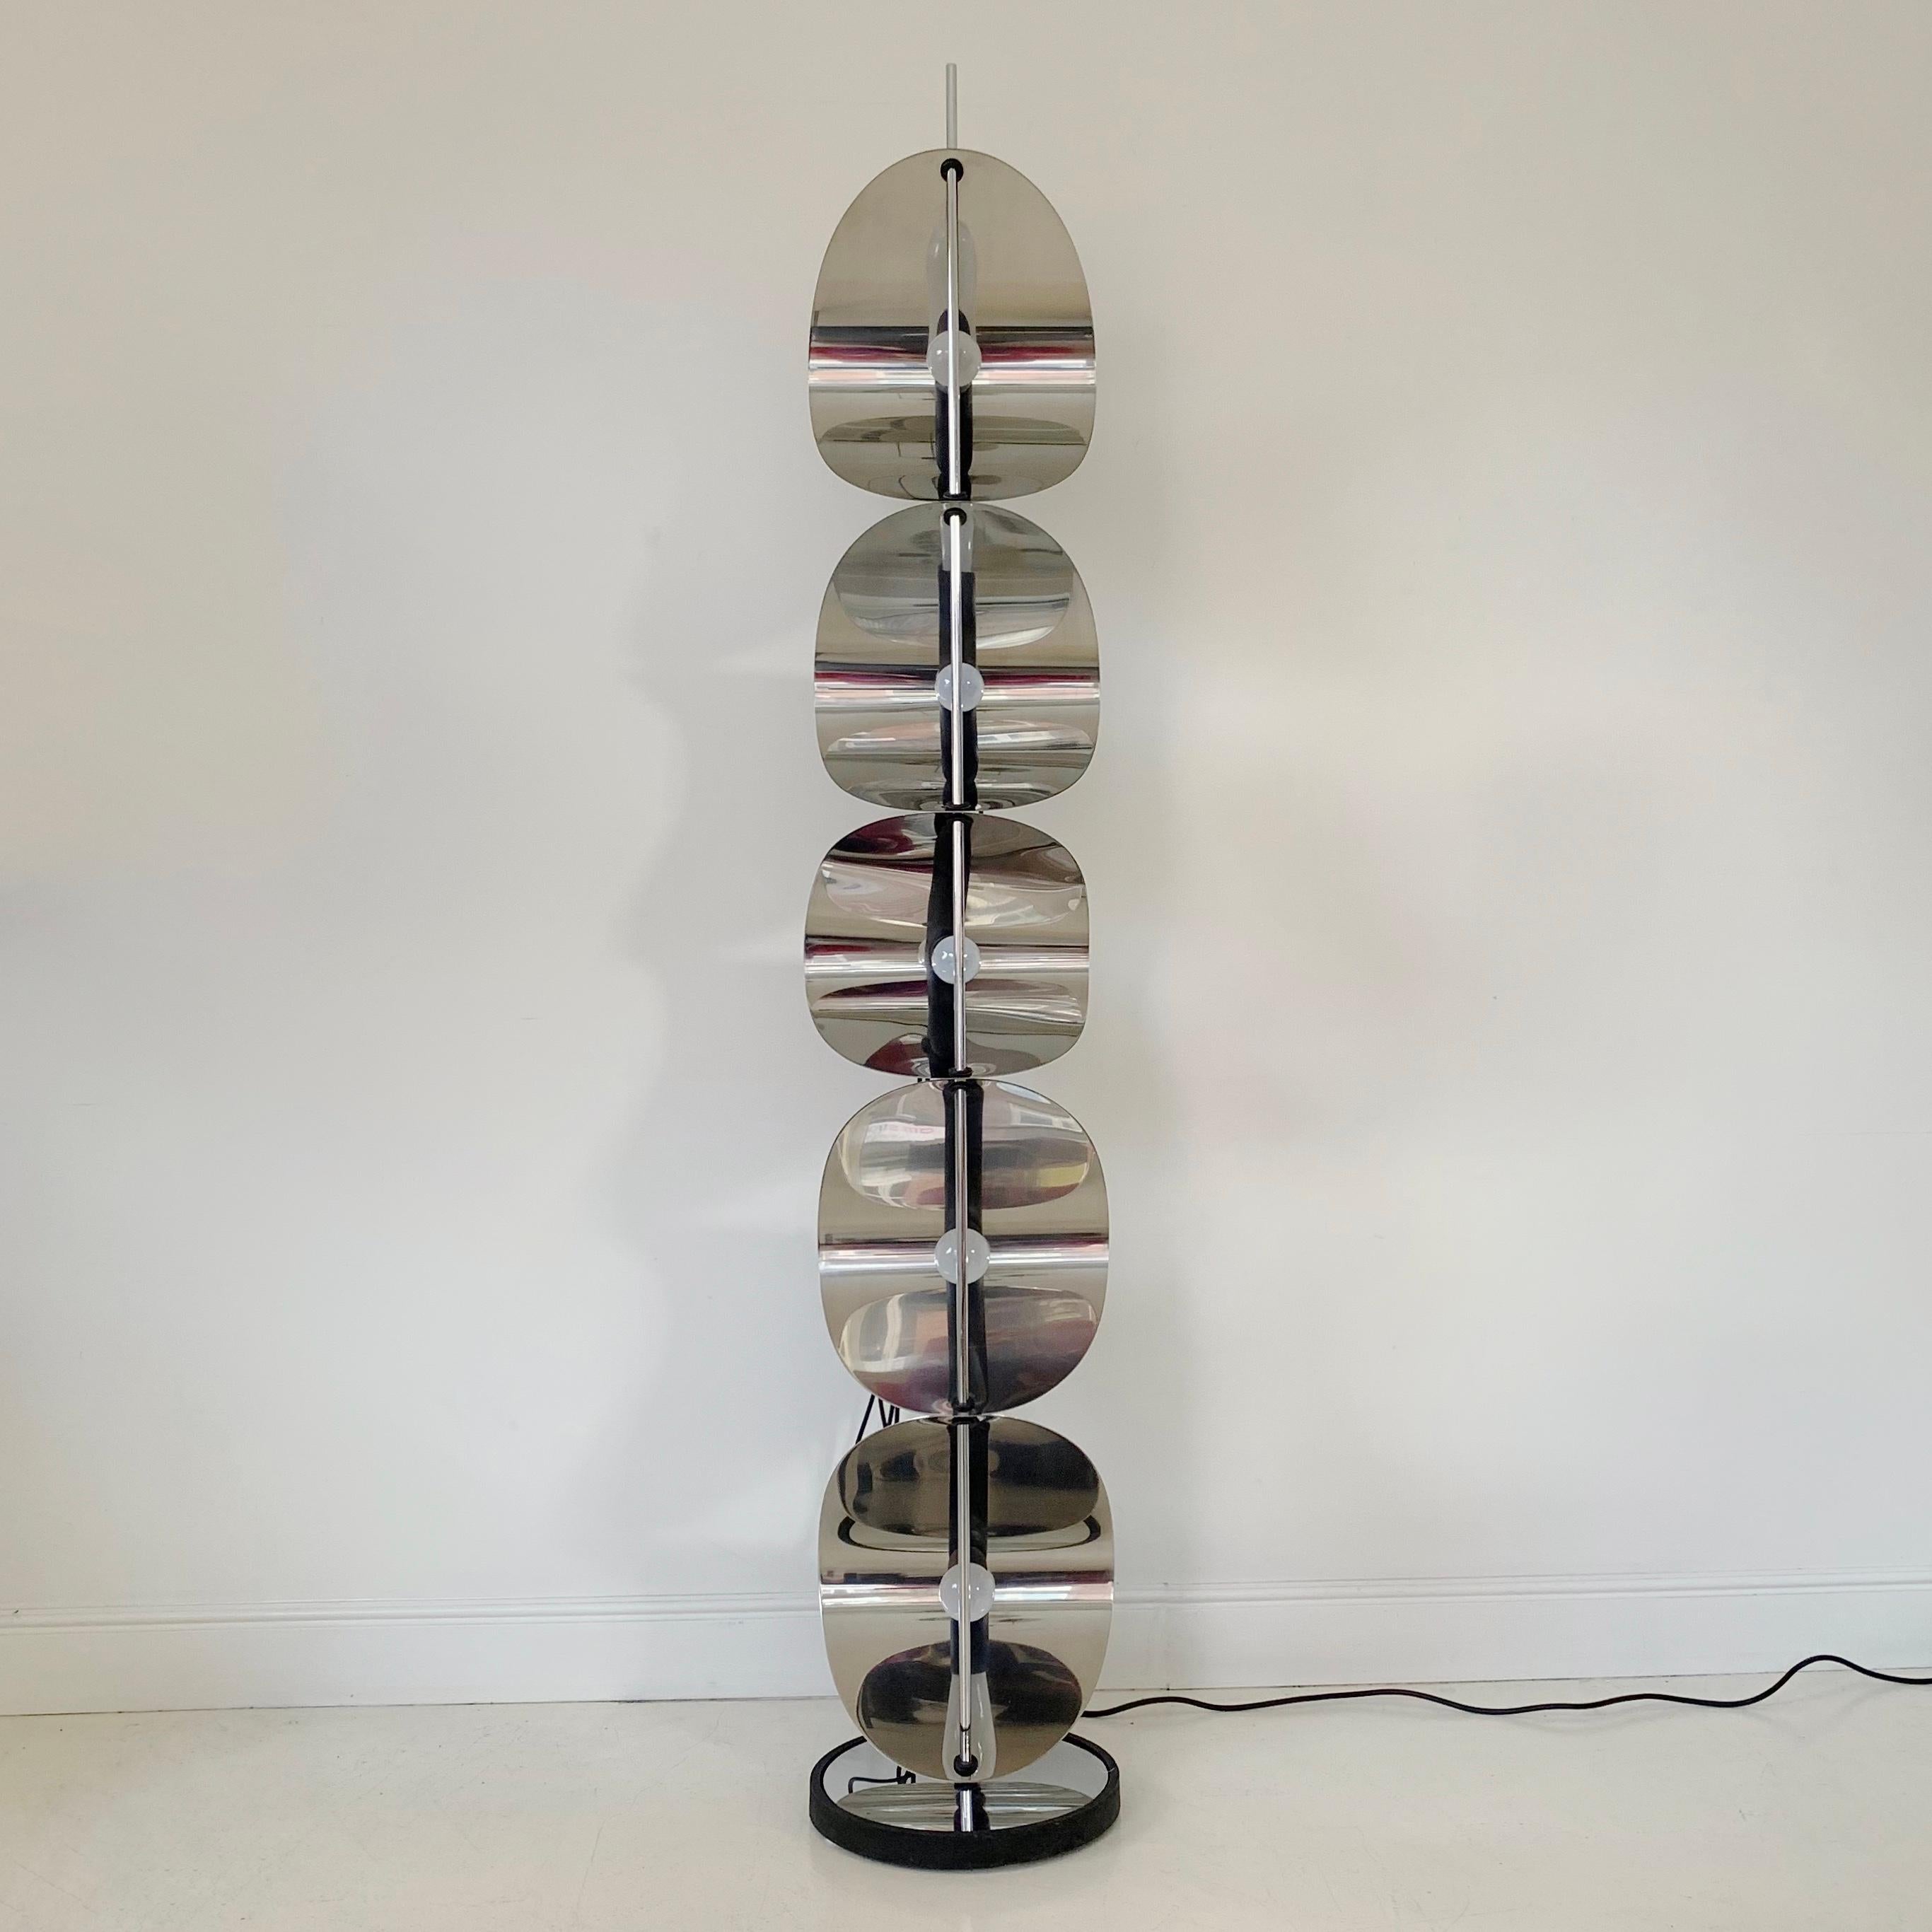 Mid-20th Century Elica Floor Lamp by Cesare Leonardi & Franca Stagi for Lumenform, 1969, Italy.